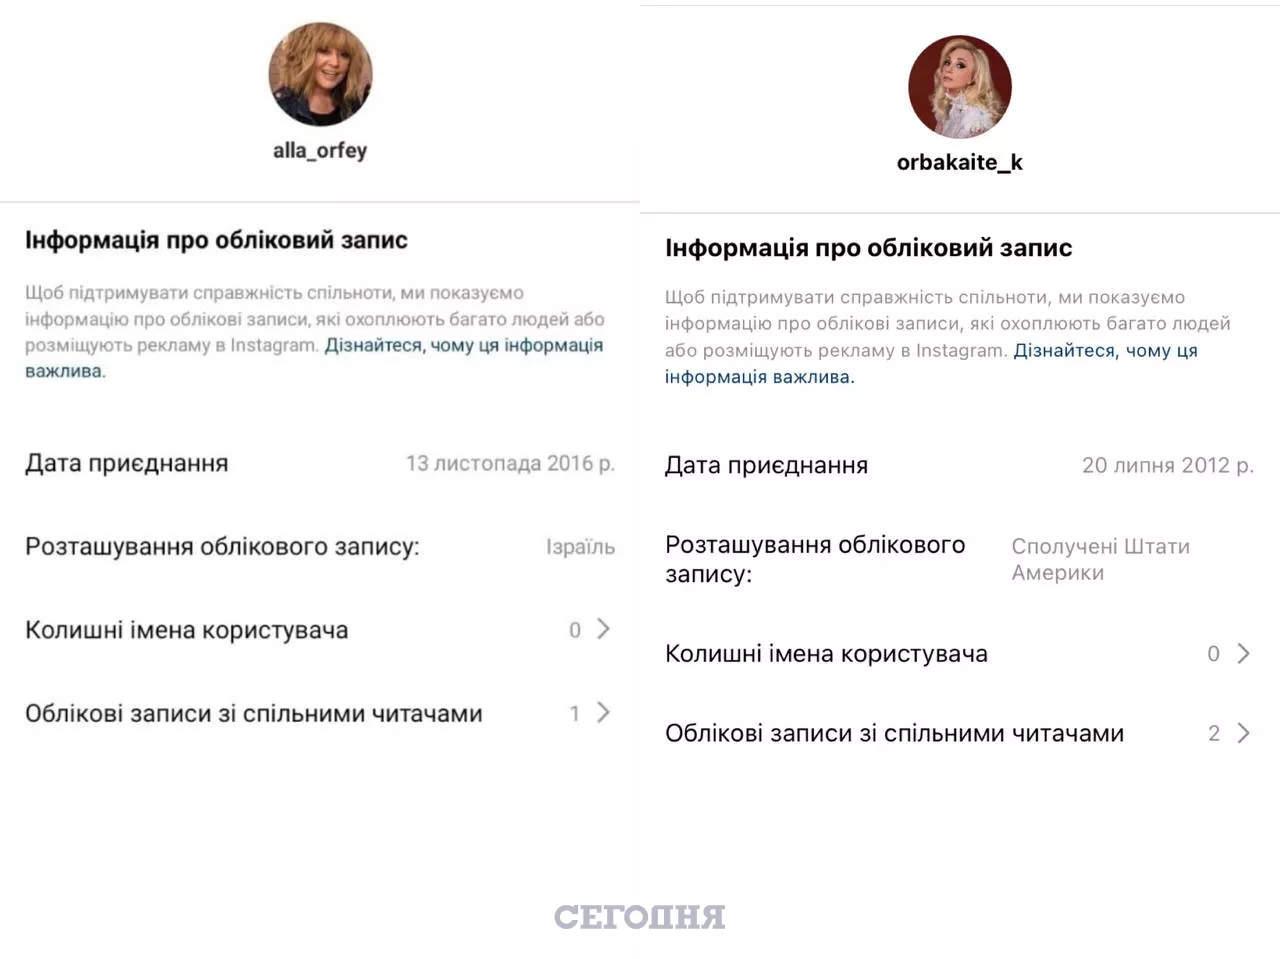 Алла Пугачева и Кристина Орбакайте